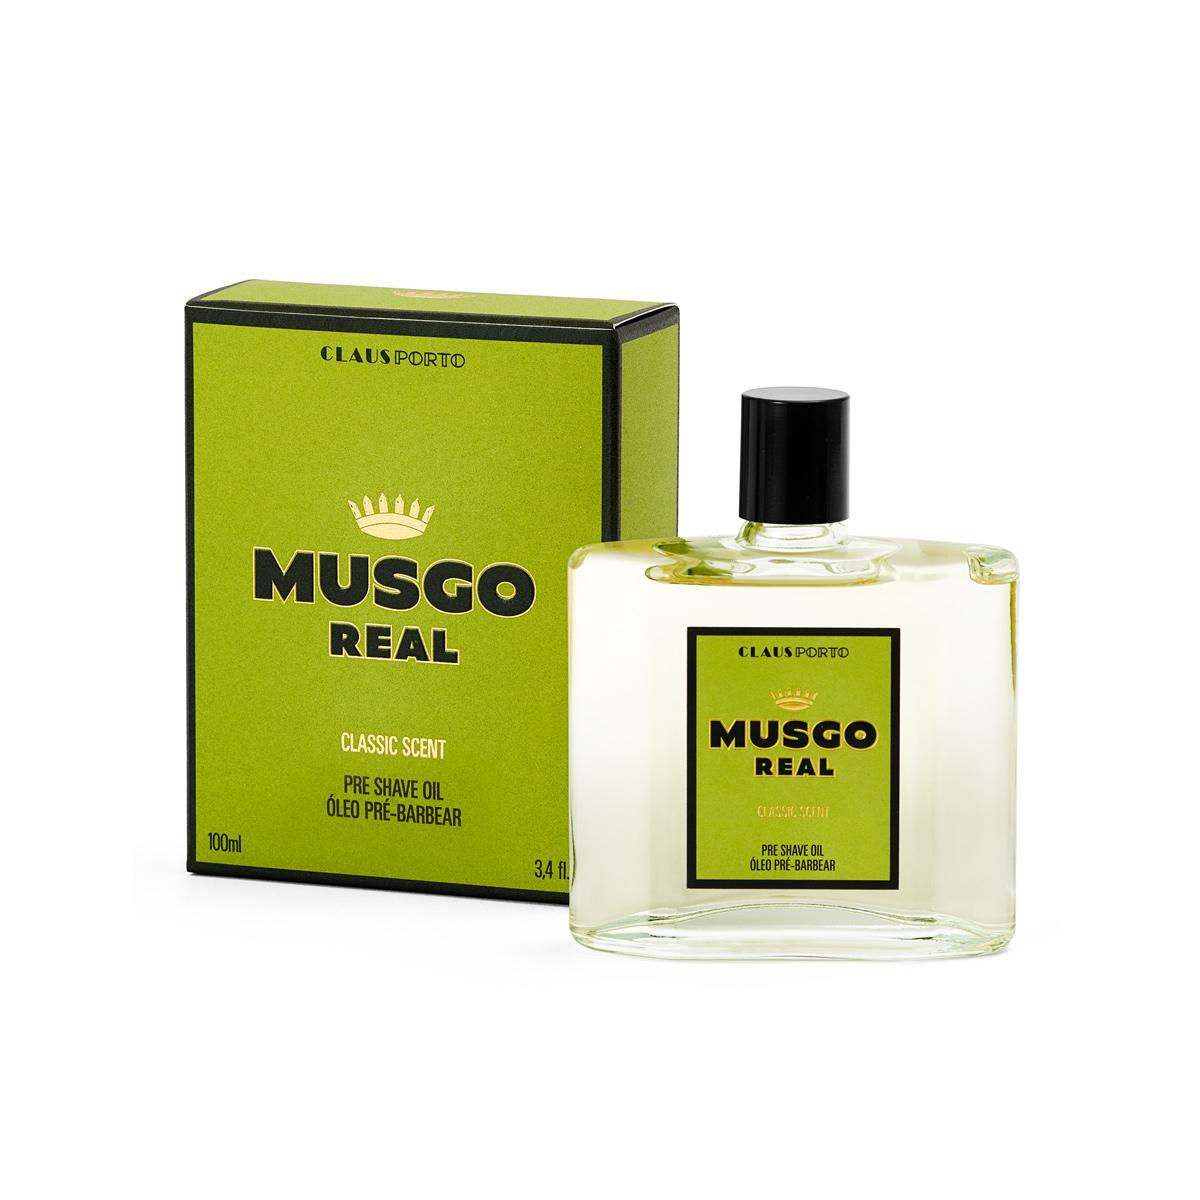 Musgo Real Pre-Shave Oil Classic Scent (100ml)